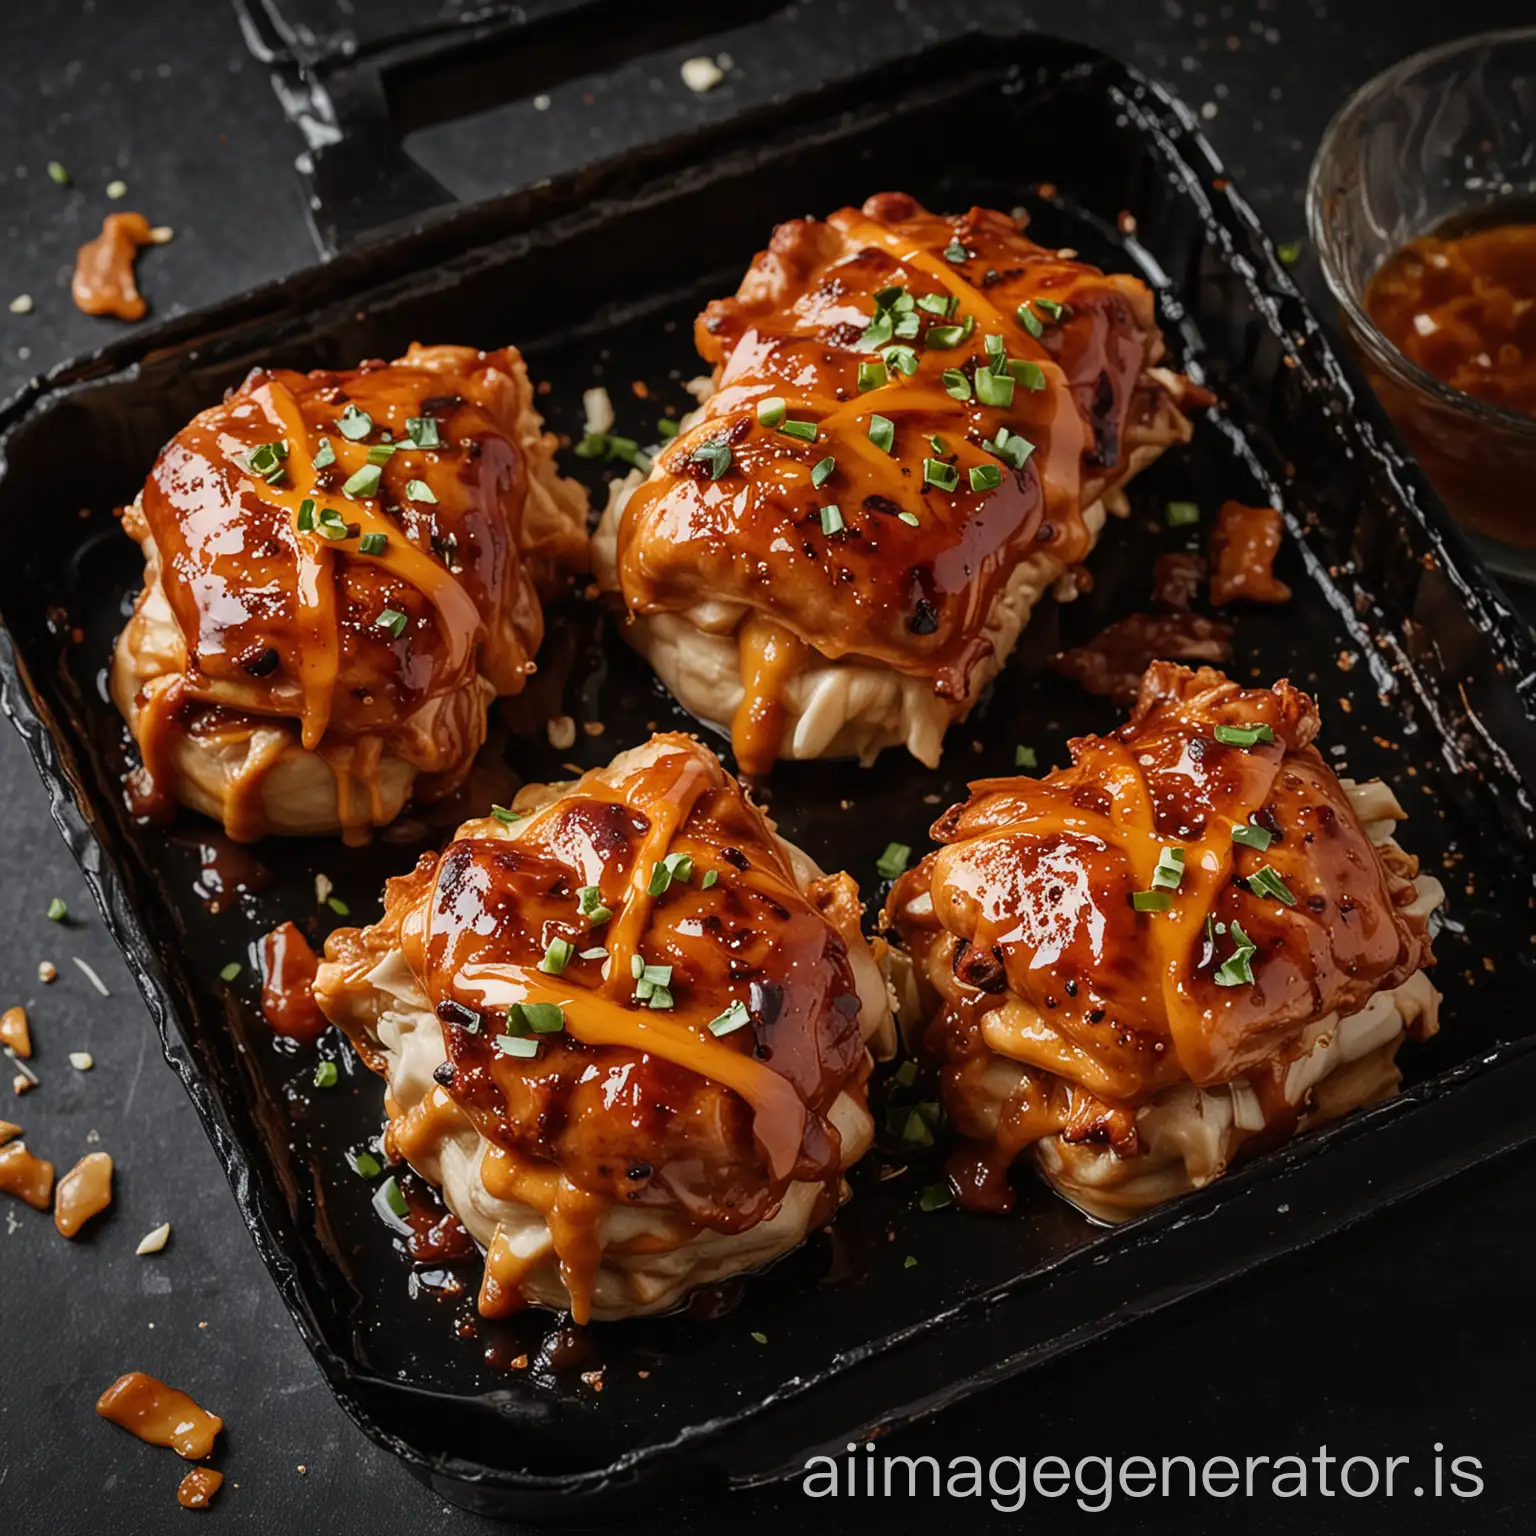 Sizzling-BBQ-Chicken-Rolls-on-Black-Platter